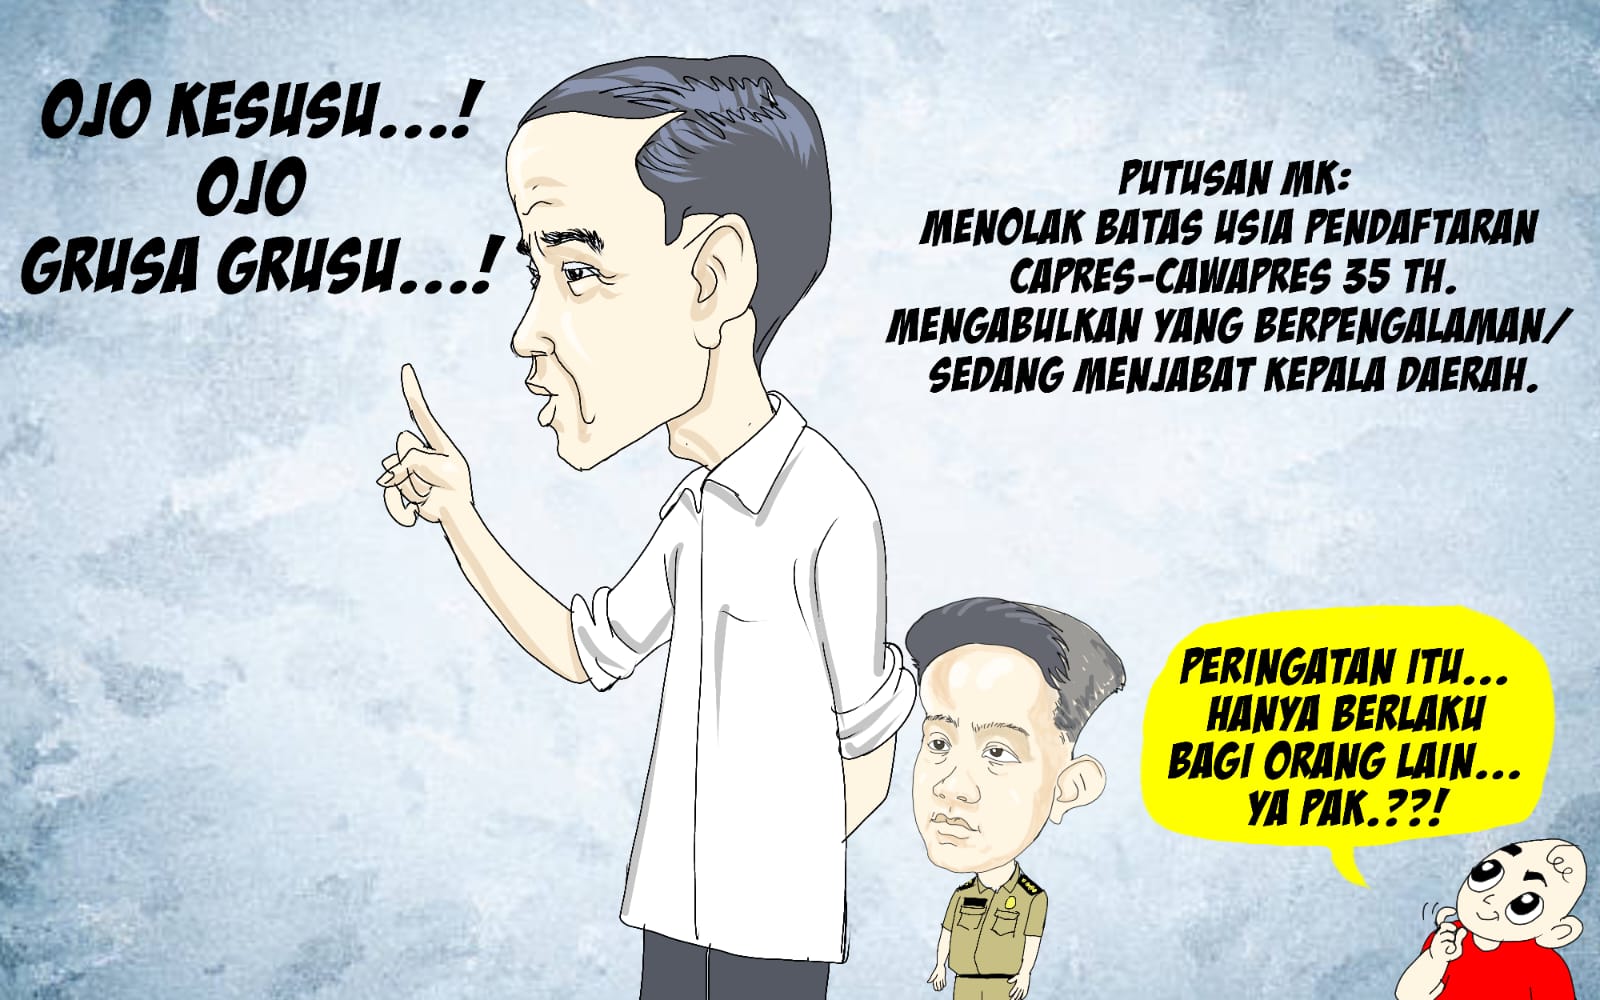 Jokowi, Kenapa Kesusu dan Grusa-Grusu?